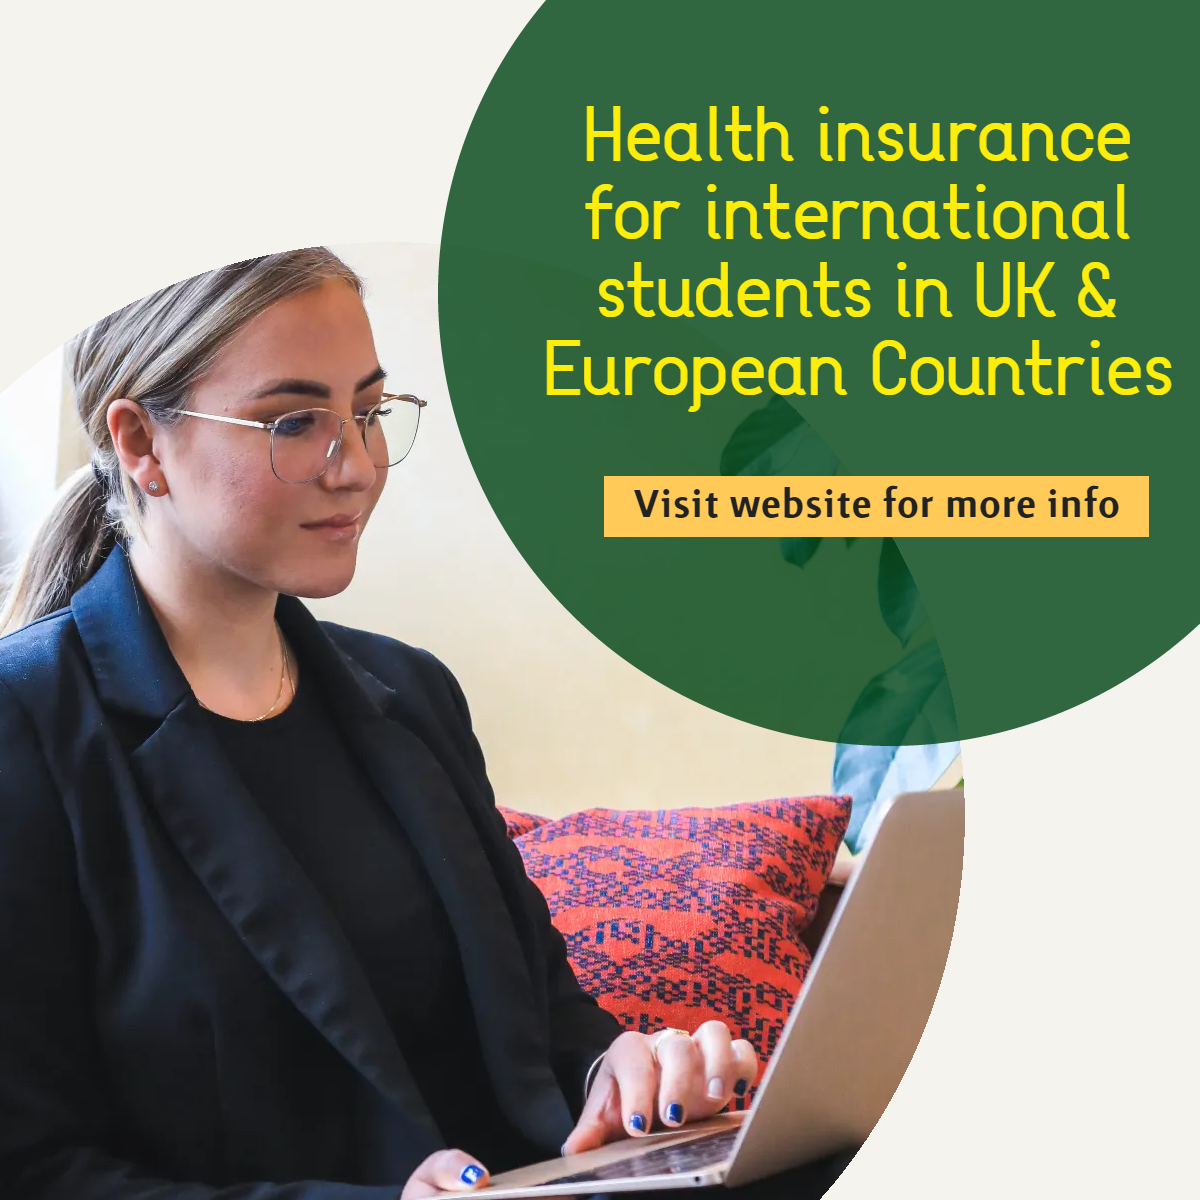 Health insurance for international students in UK